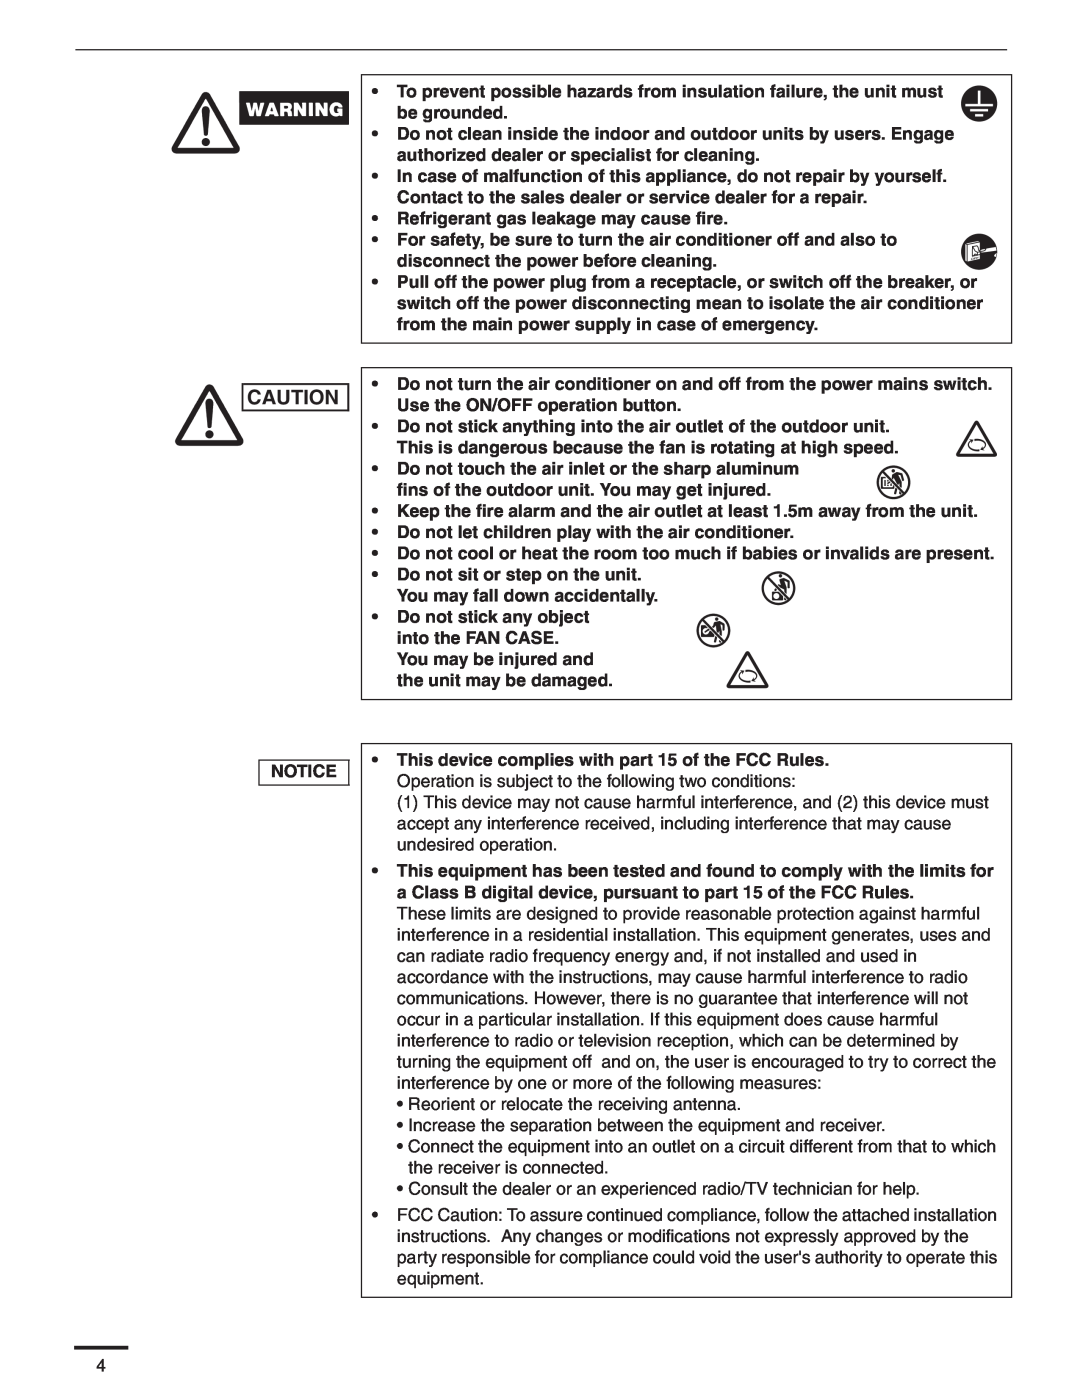 Panasonic CU-KS18NKU, CS-KS18NKU service manual •Refrigerant gas leakage may cause fire 